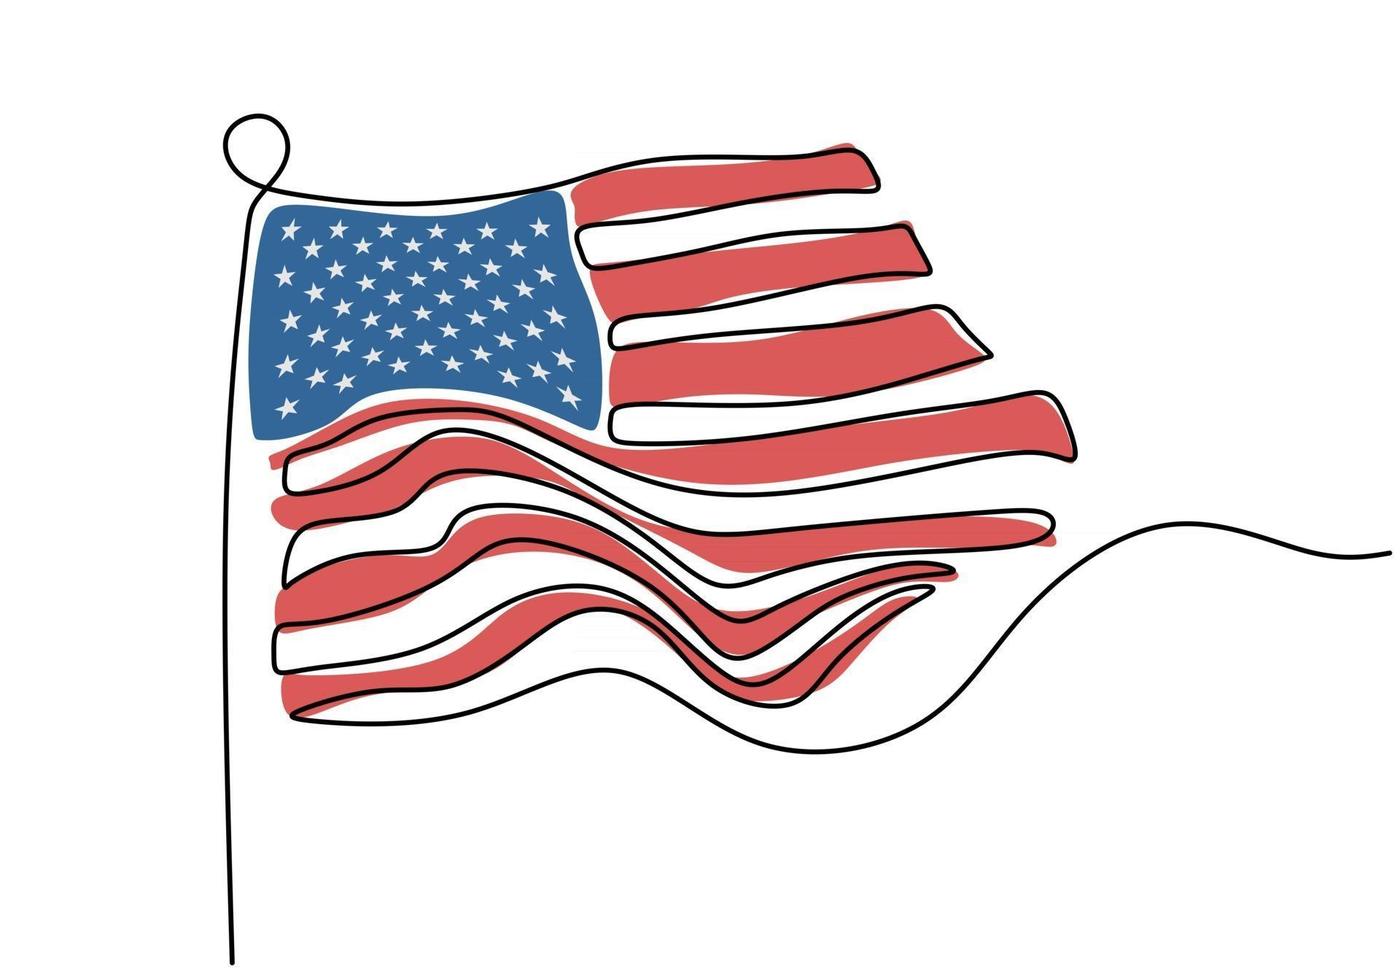 amerikansk flagga kontinuerlig en linje ritning minimalistisk design vektor